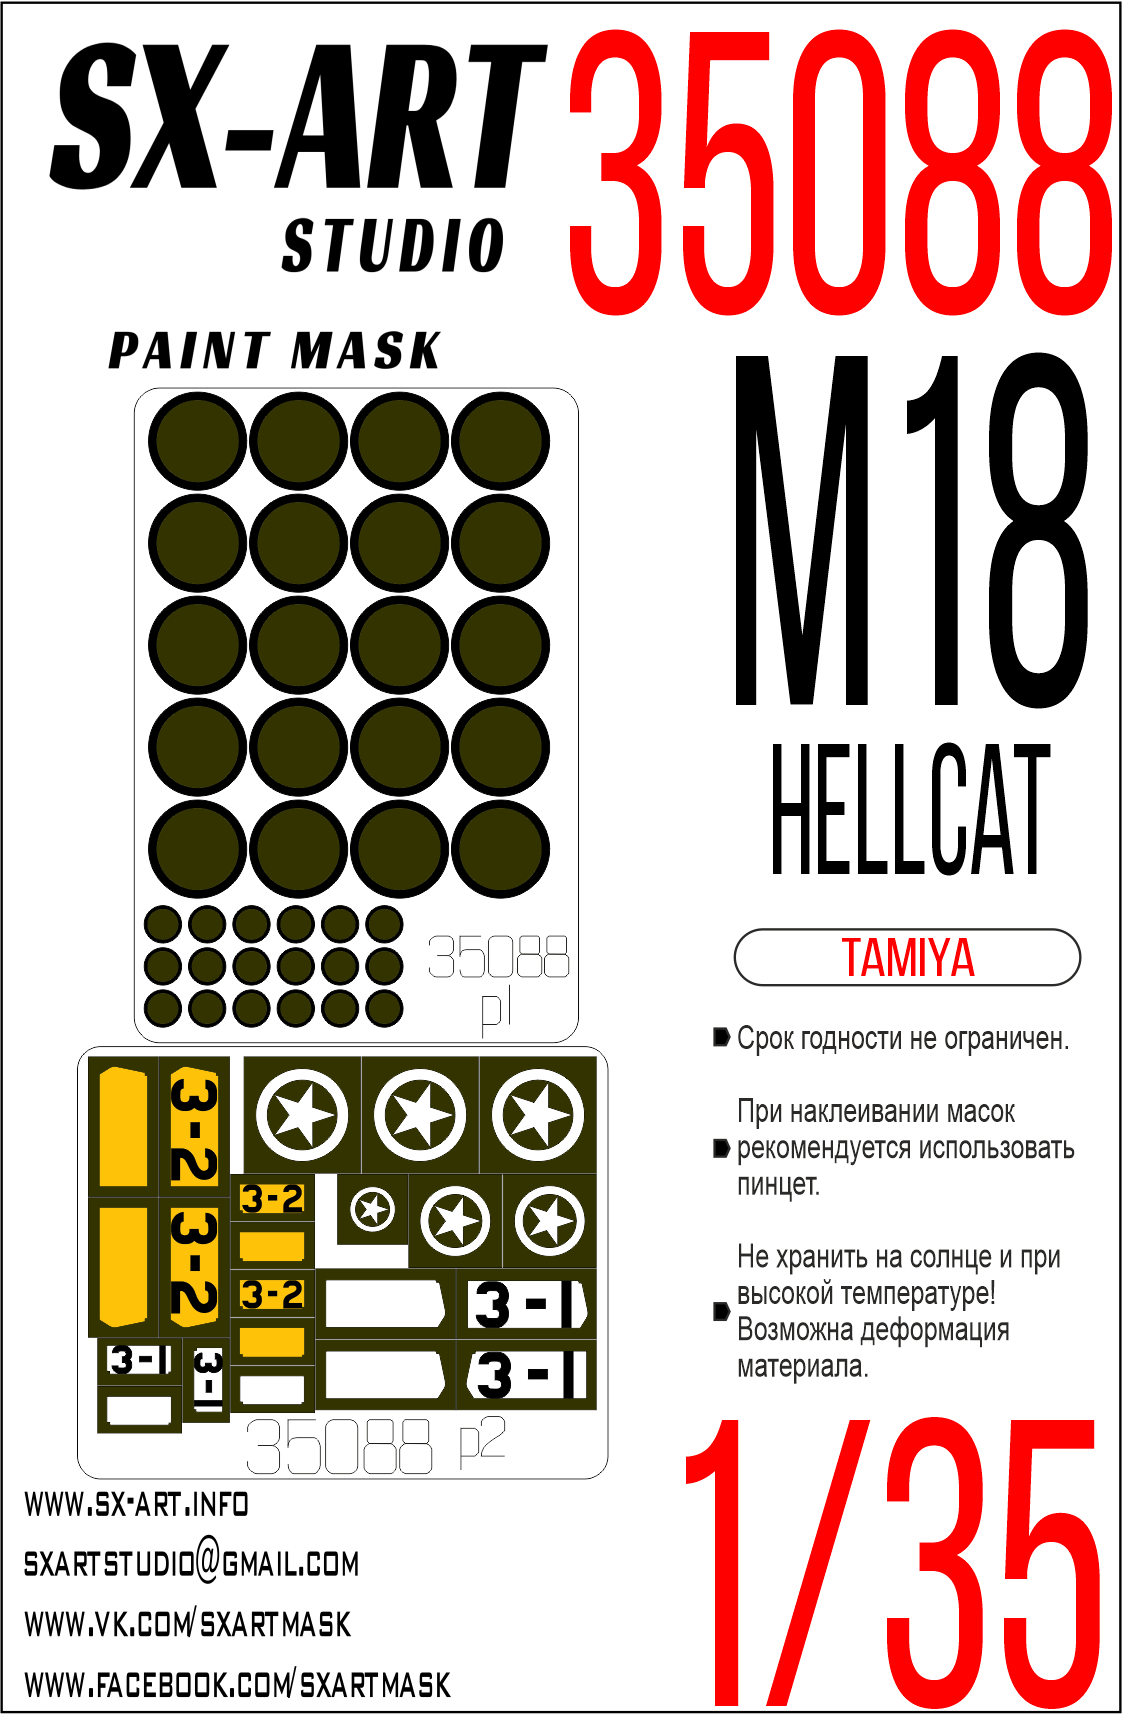 35088SX Окрасочная маска M18 Hellcat (Tamiya)